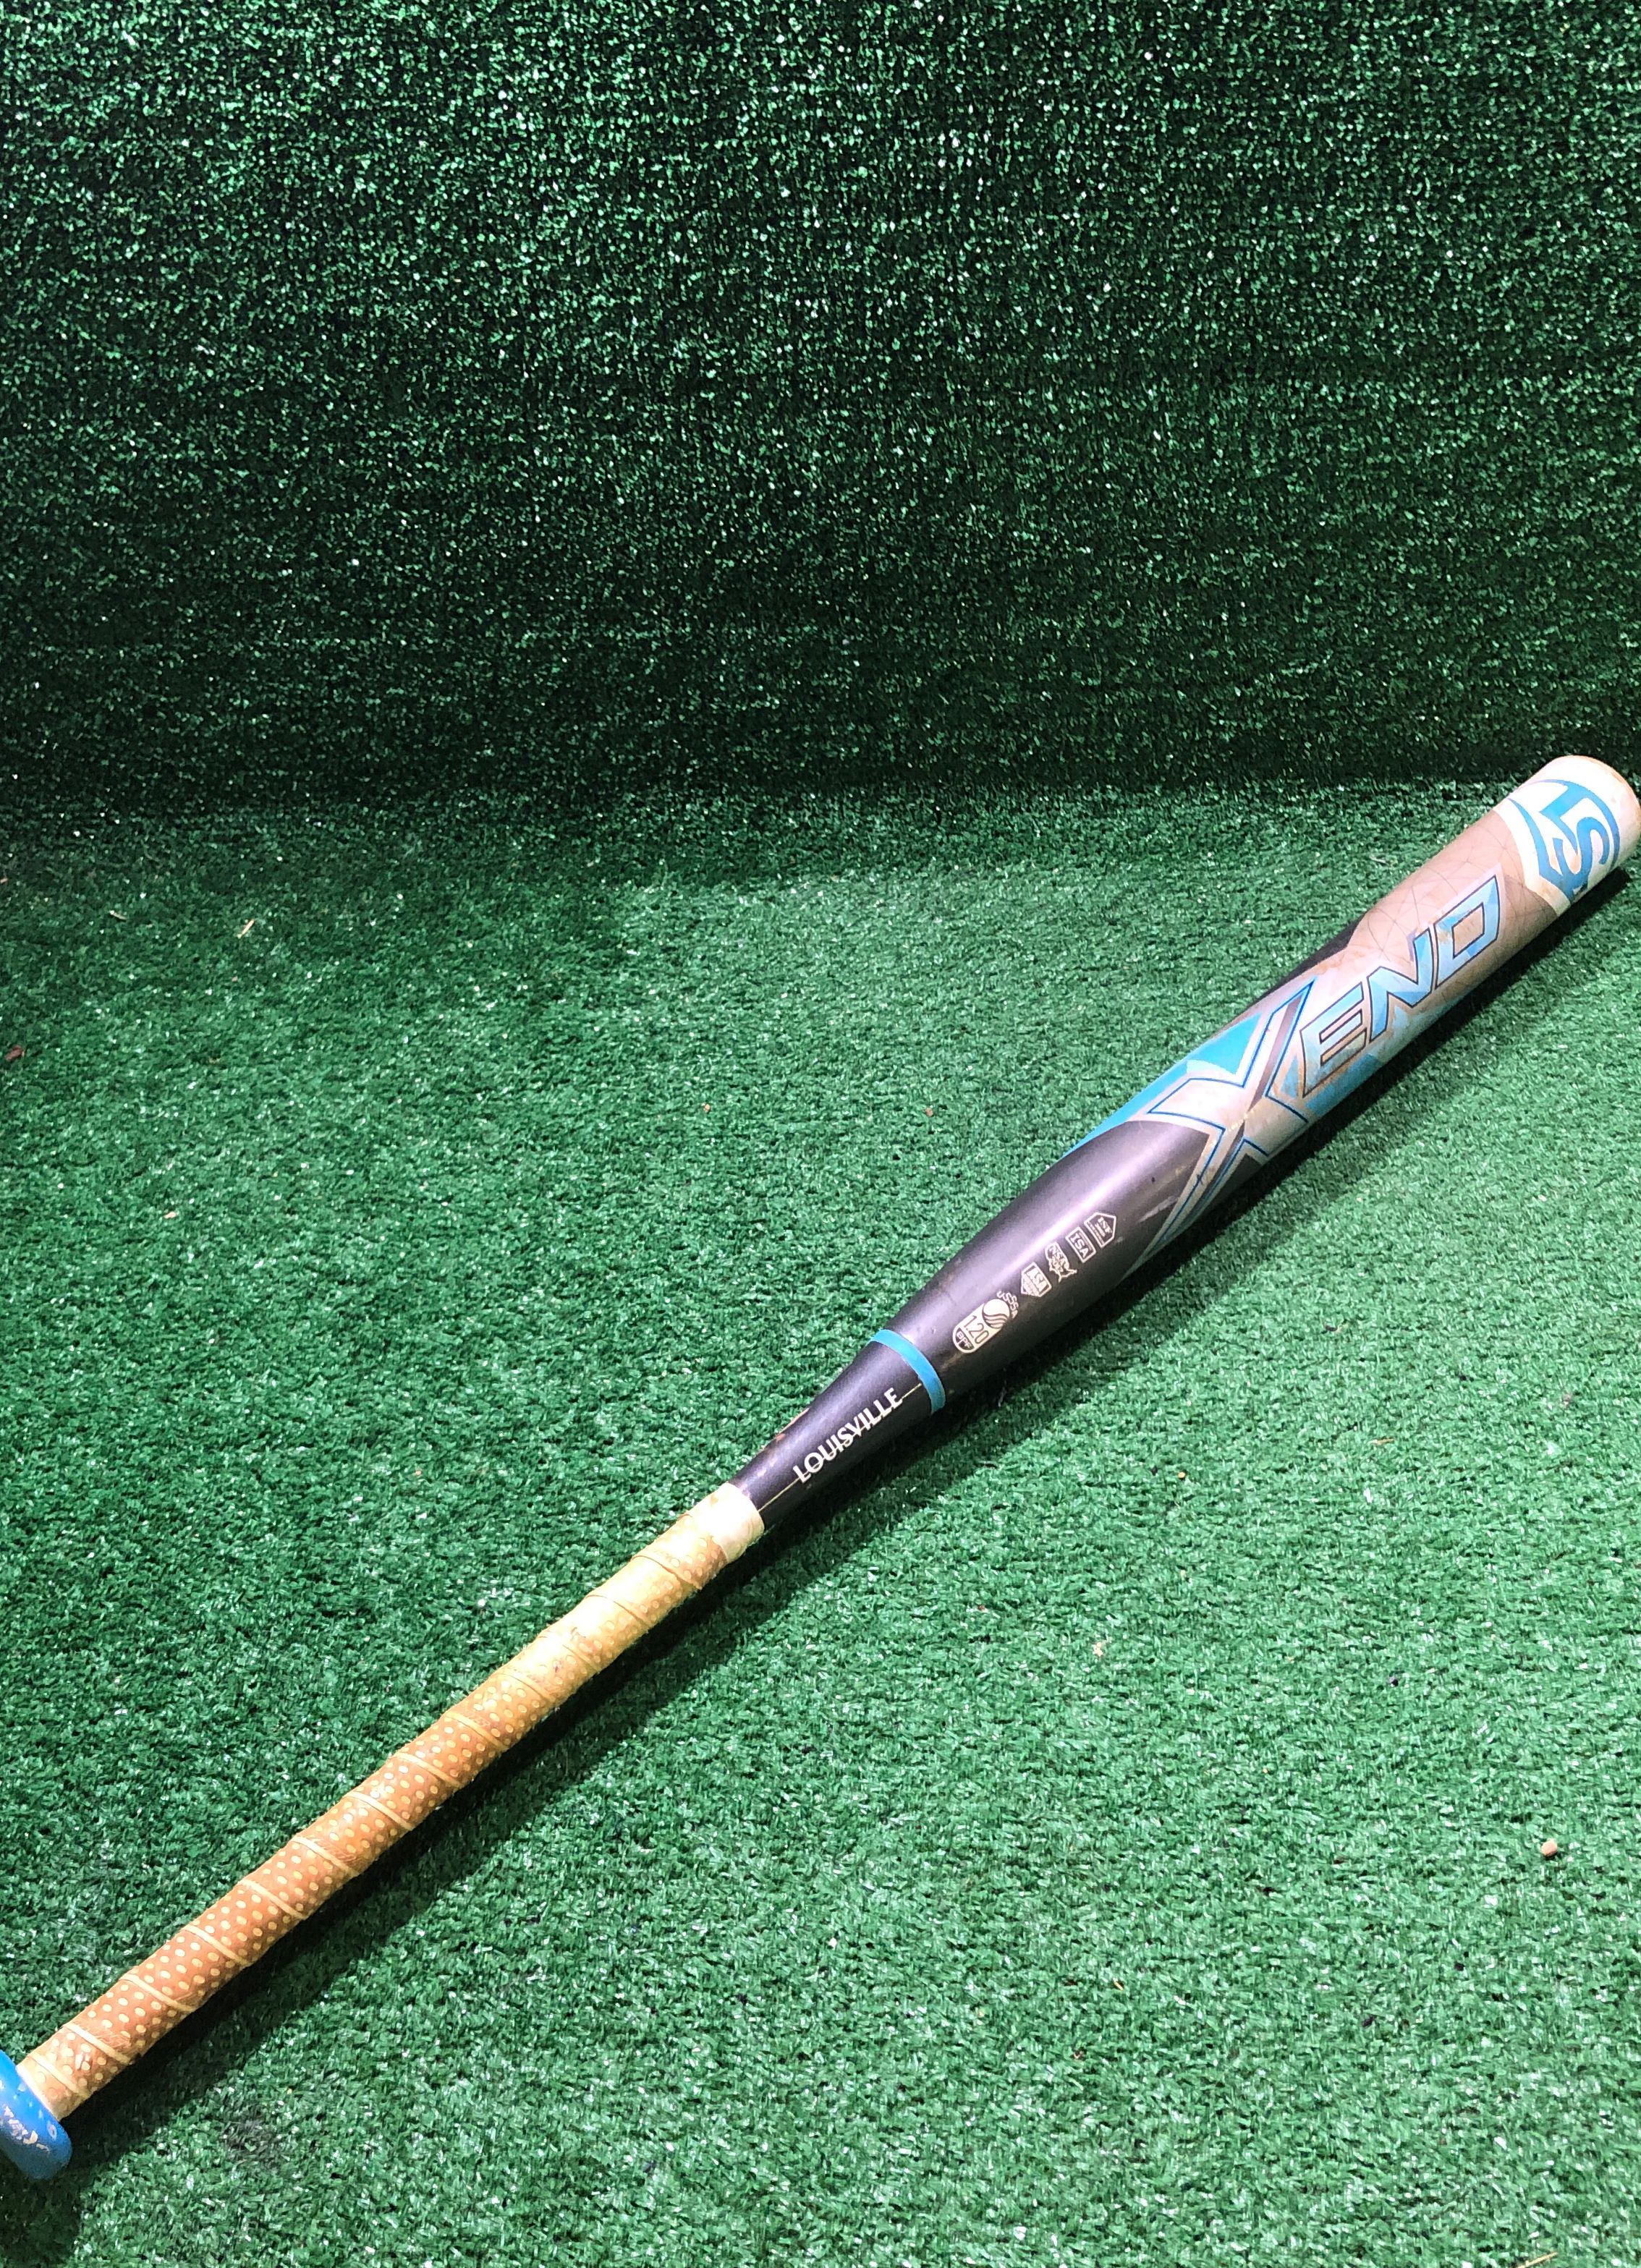 Louisville Slugger WTLFPXN19A10 Softball Bat 34 24 oz. (-10) 2 1/4